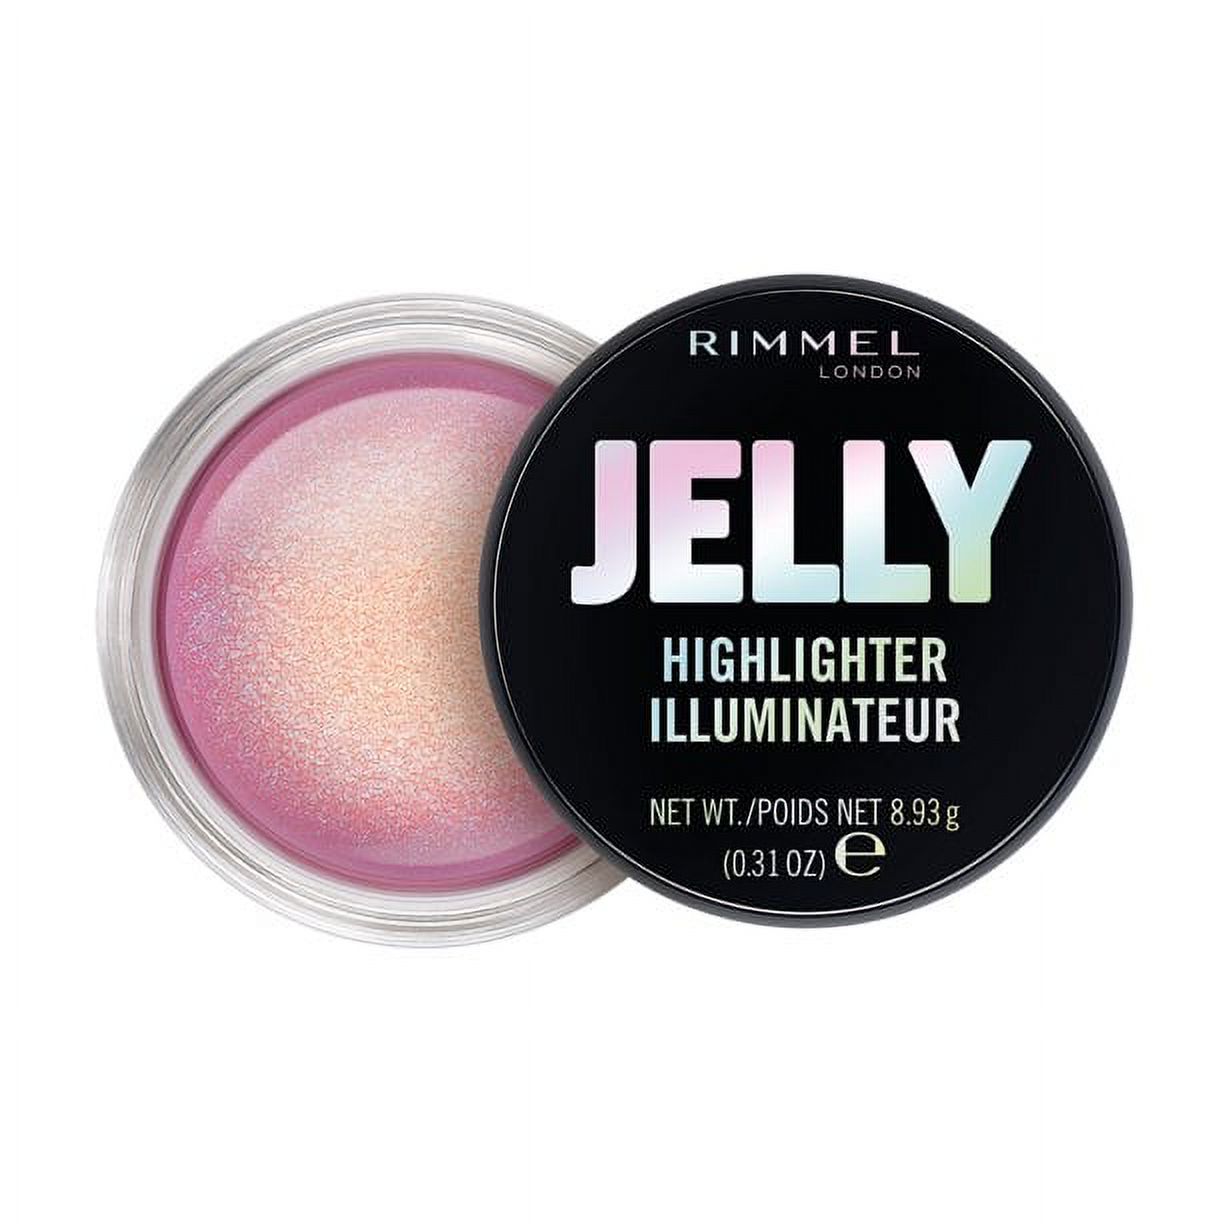 Rimmel London Jelly Highlighter, 040 Shifty Shimmer, 0.31 oz - image 1 of 6